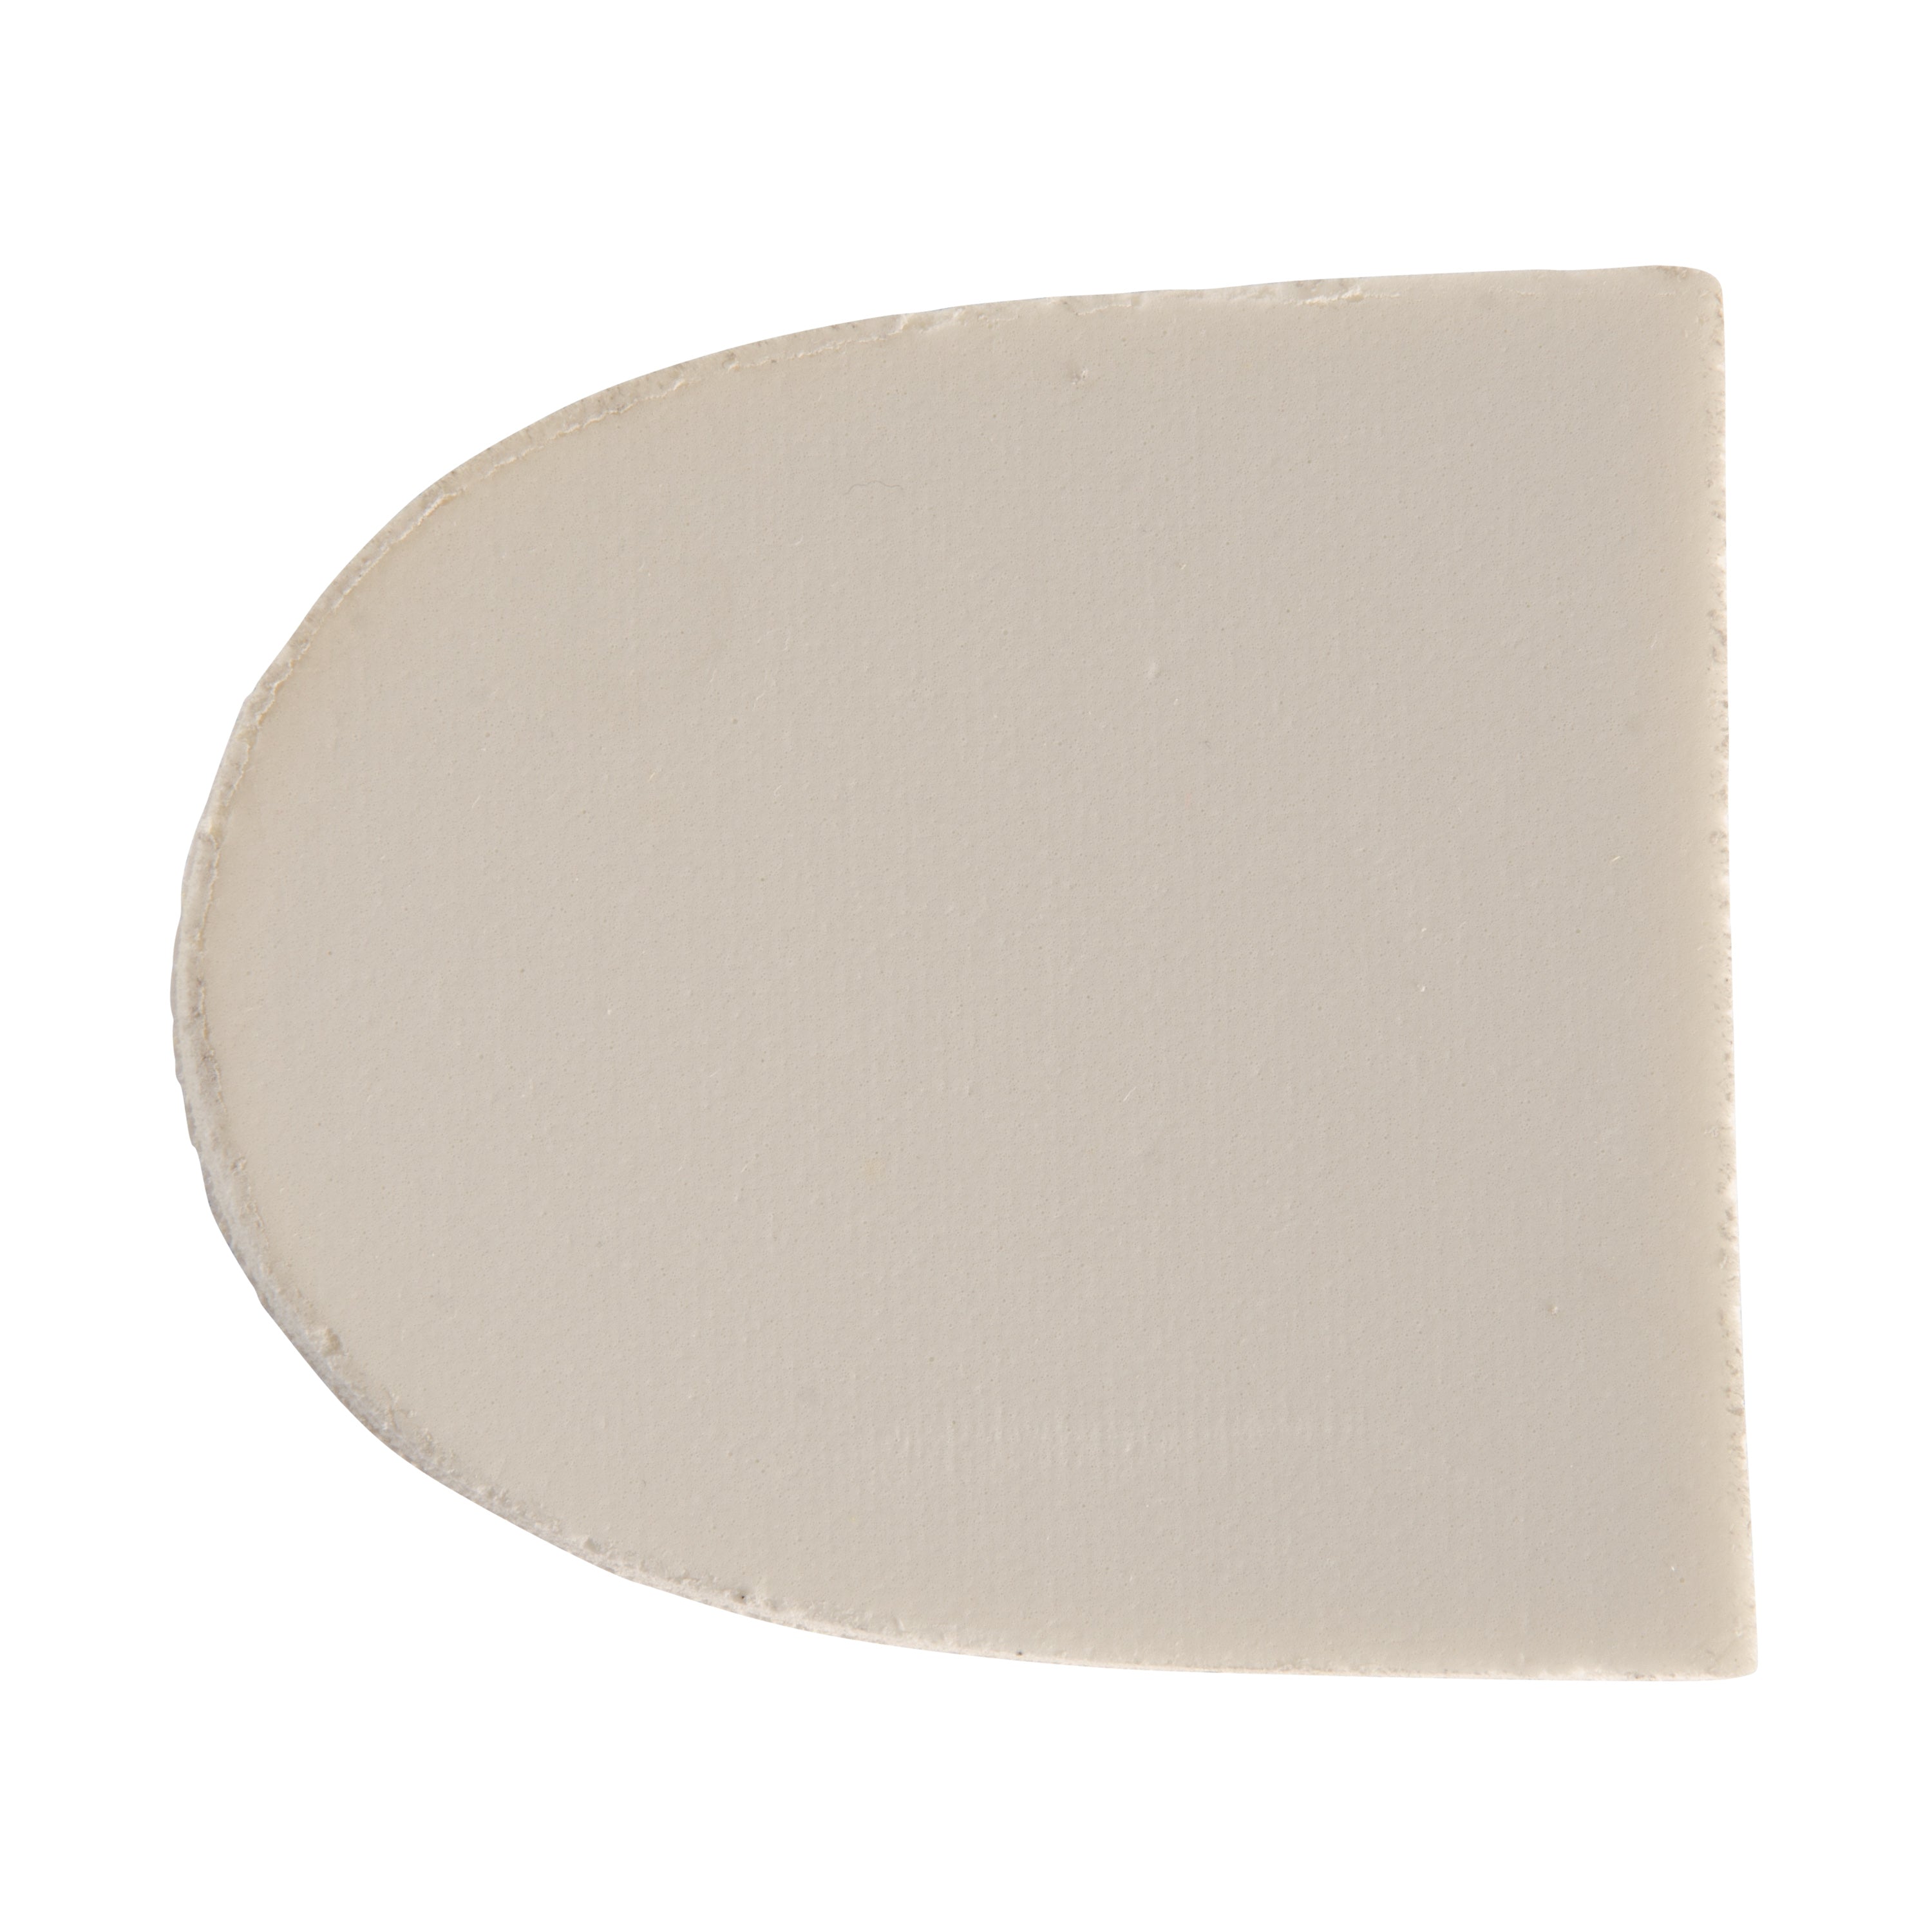 Stein's 1/4" Adhesive Foam Heel Pad #11, 100/pk AM-765-3411-0000